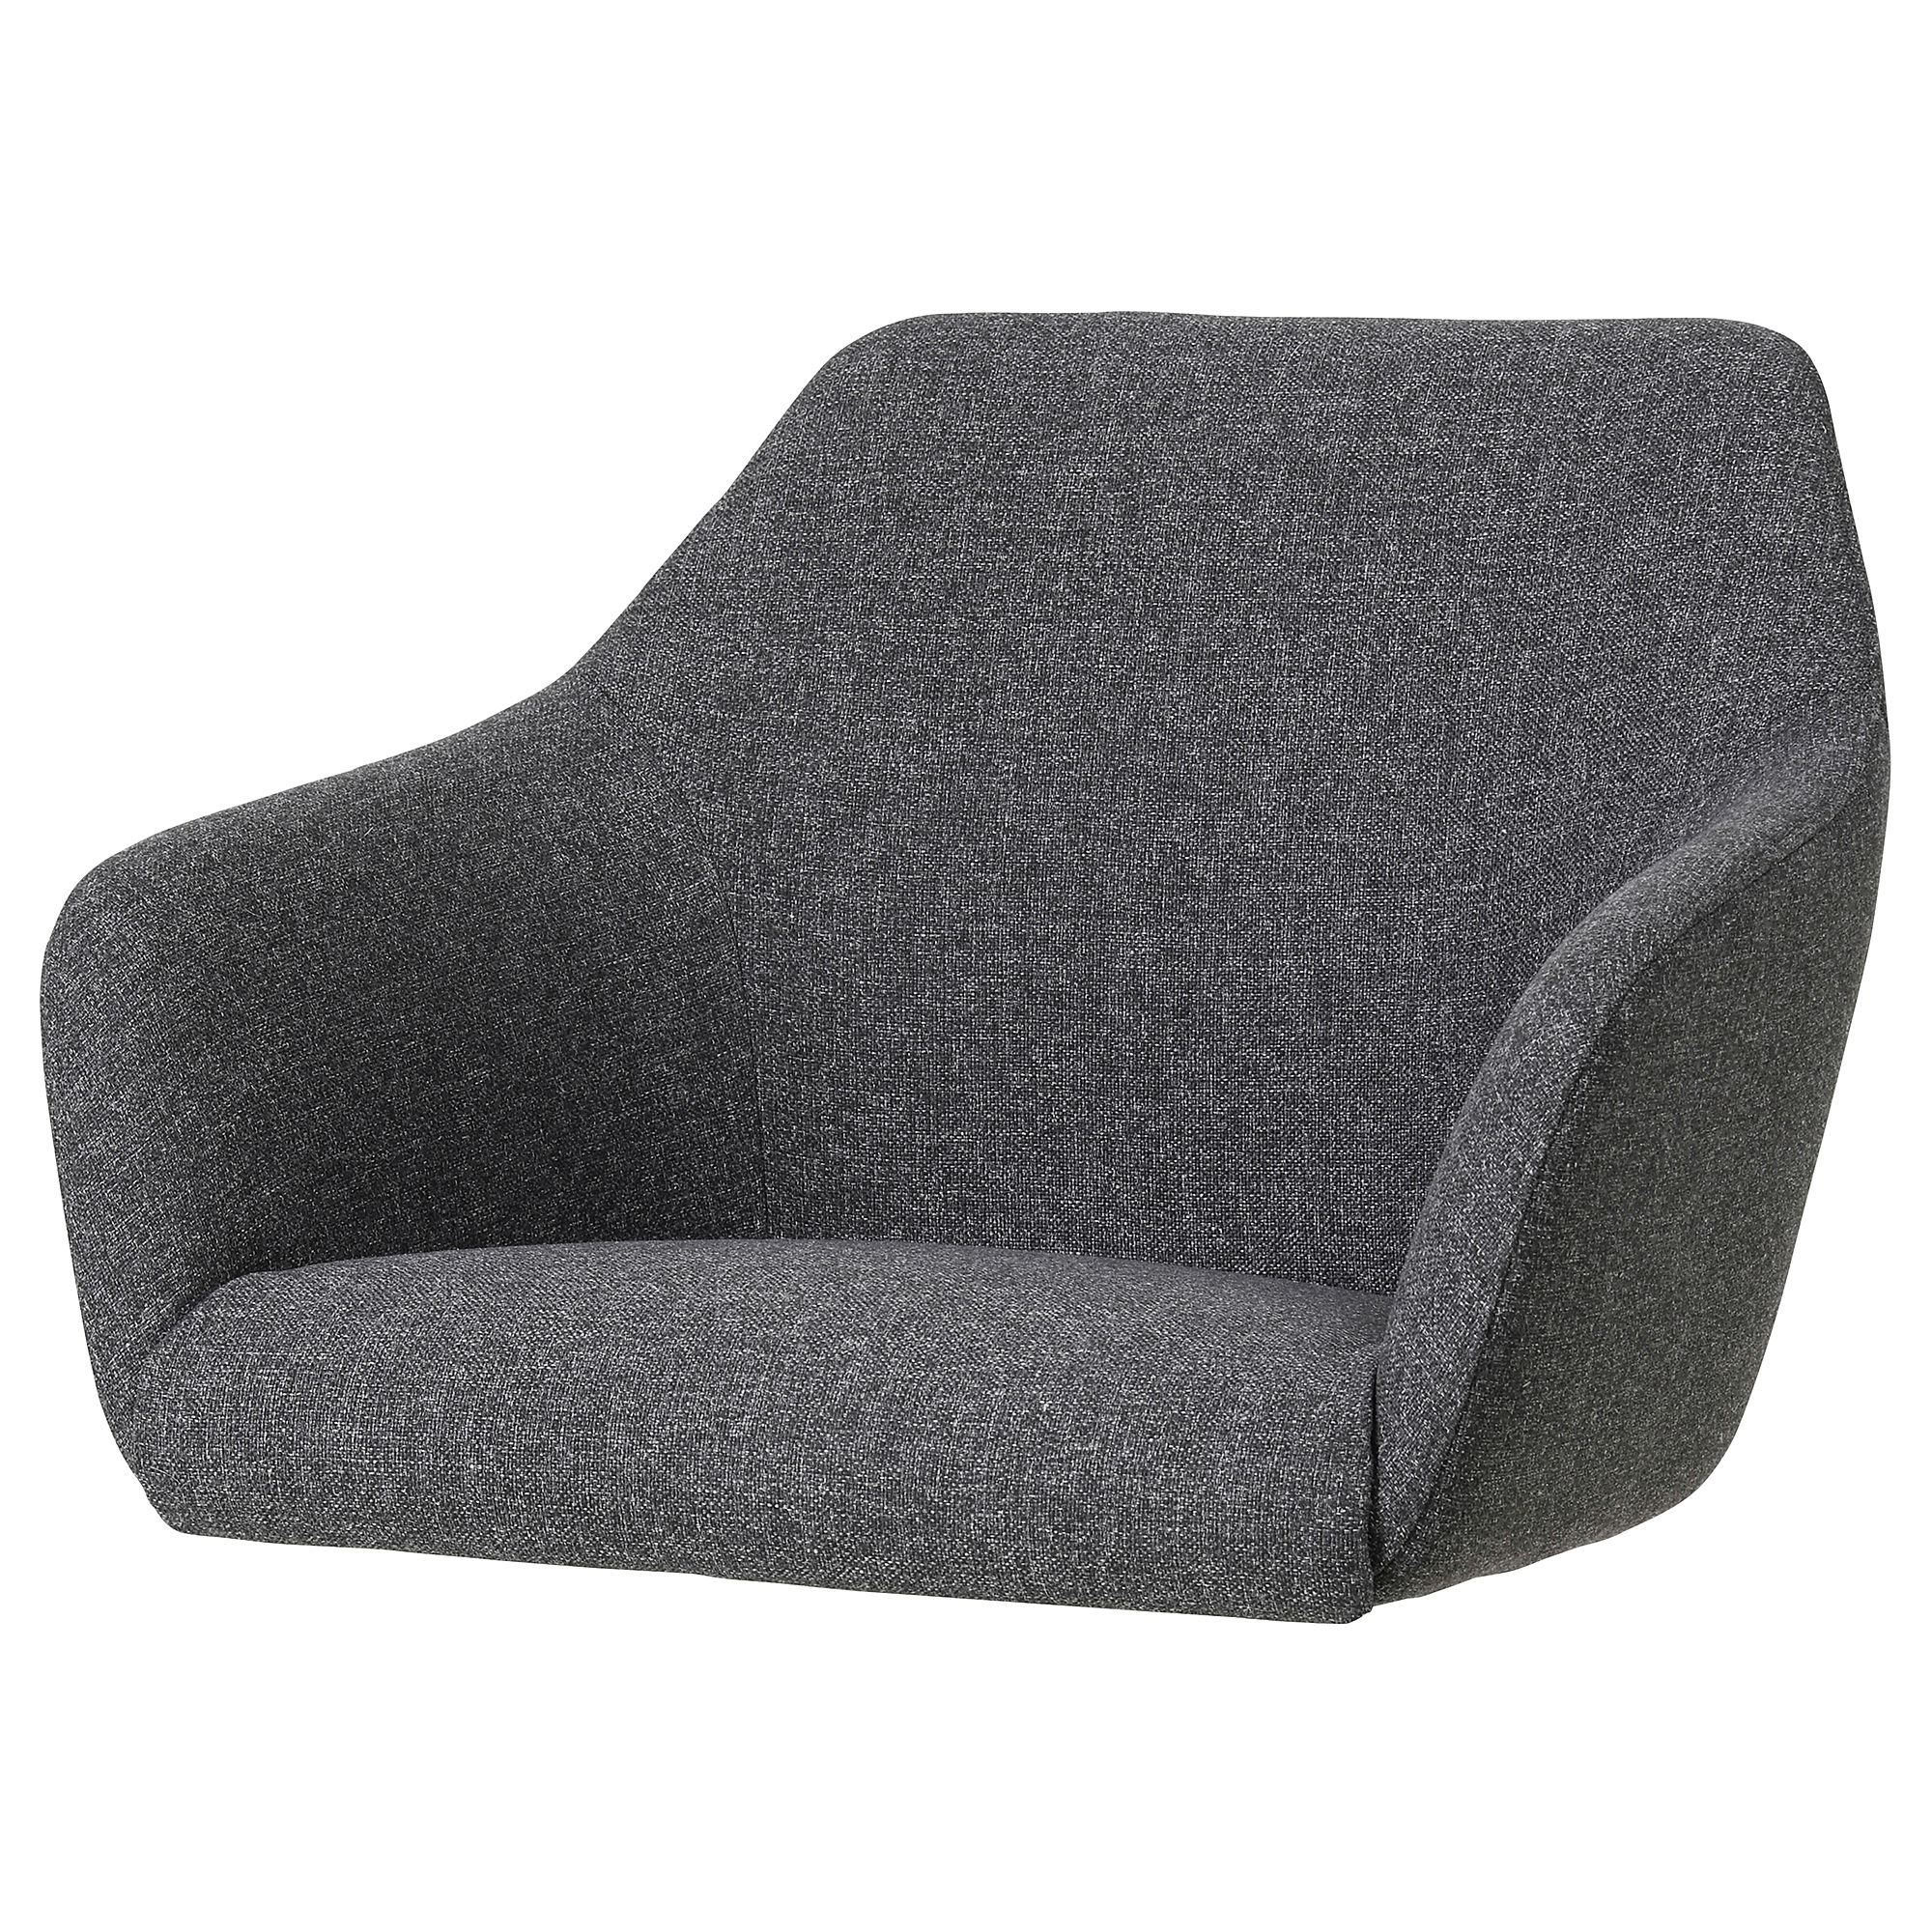 TOSSBERG - 椅框, Gunnared 深灰色| IKEA 香港及澳門